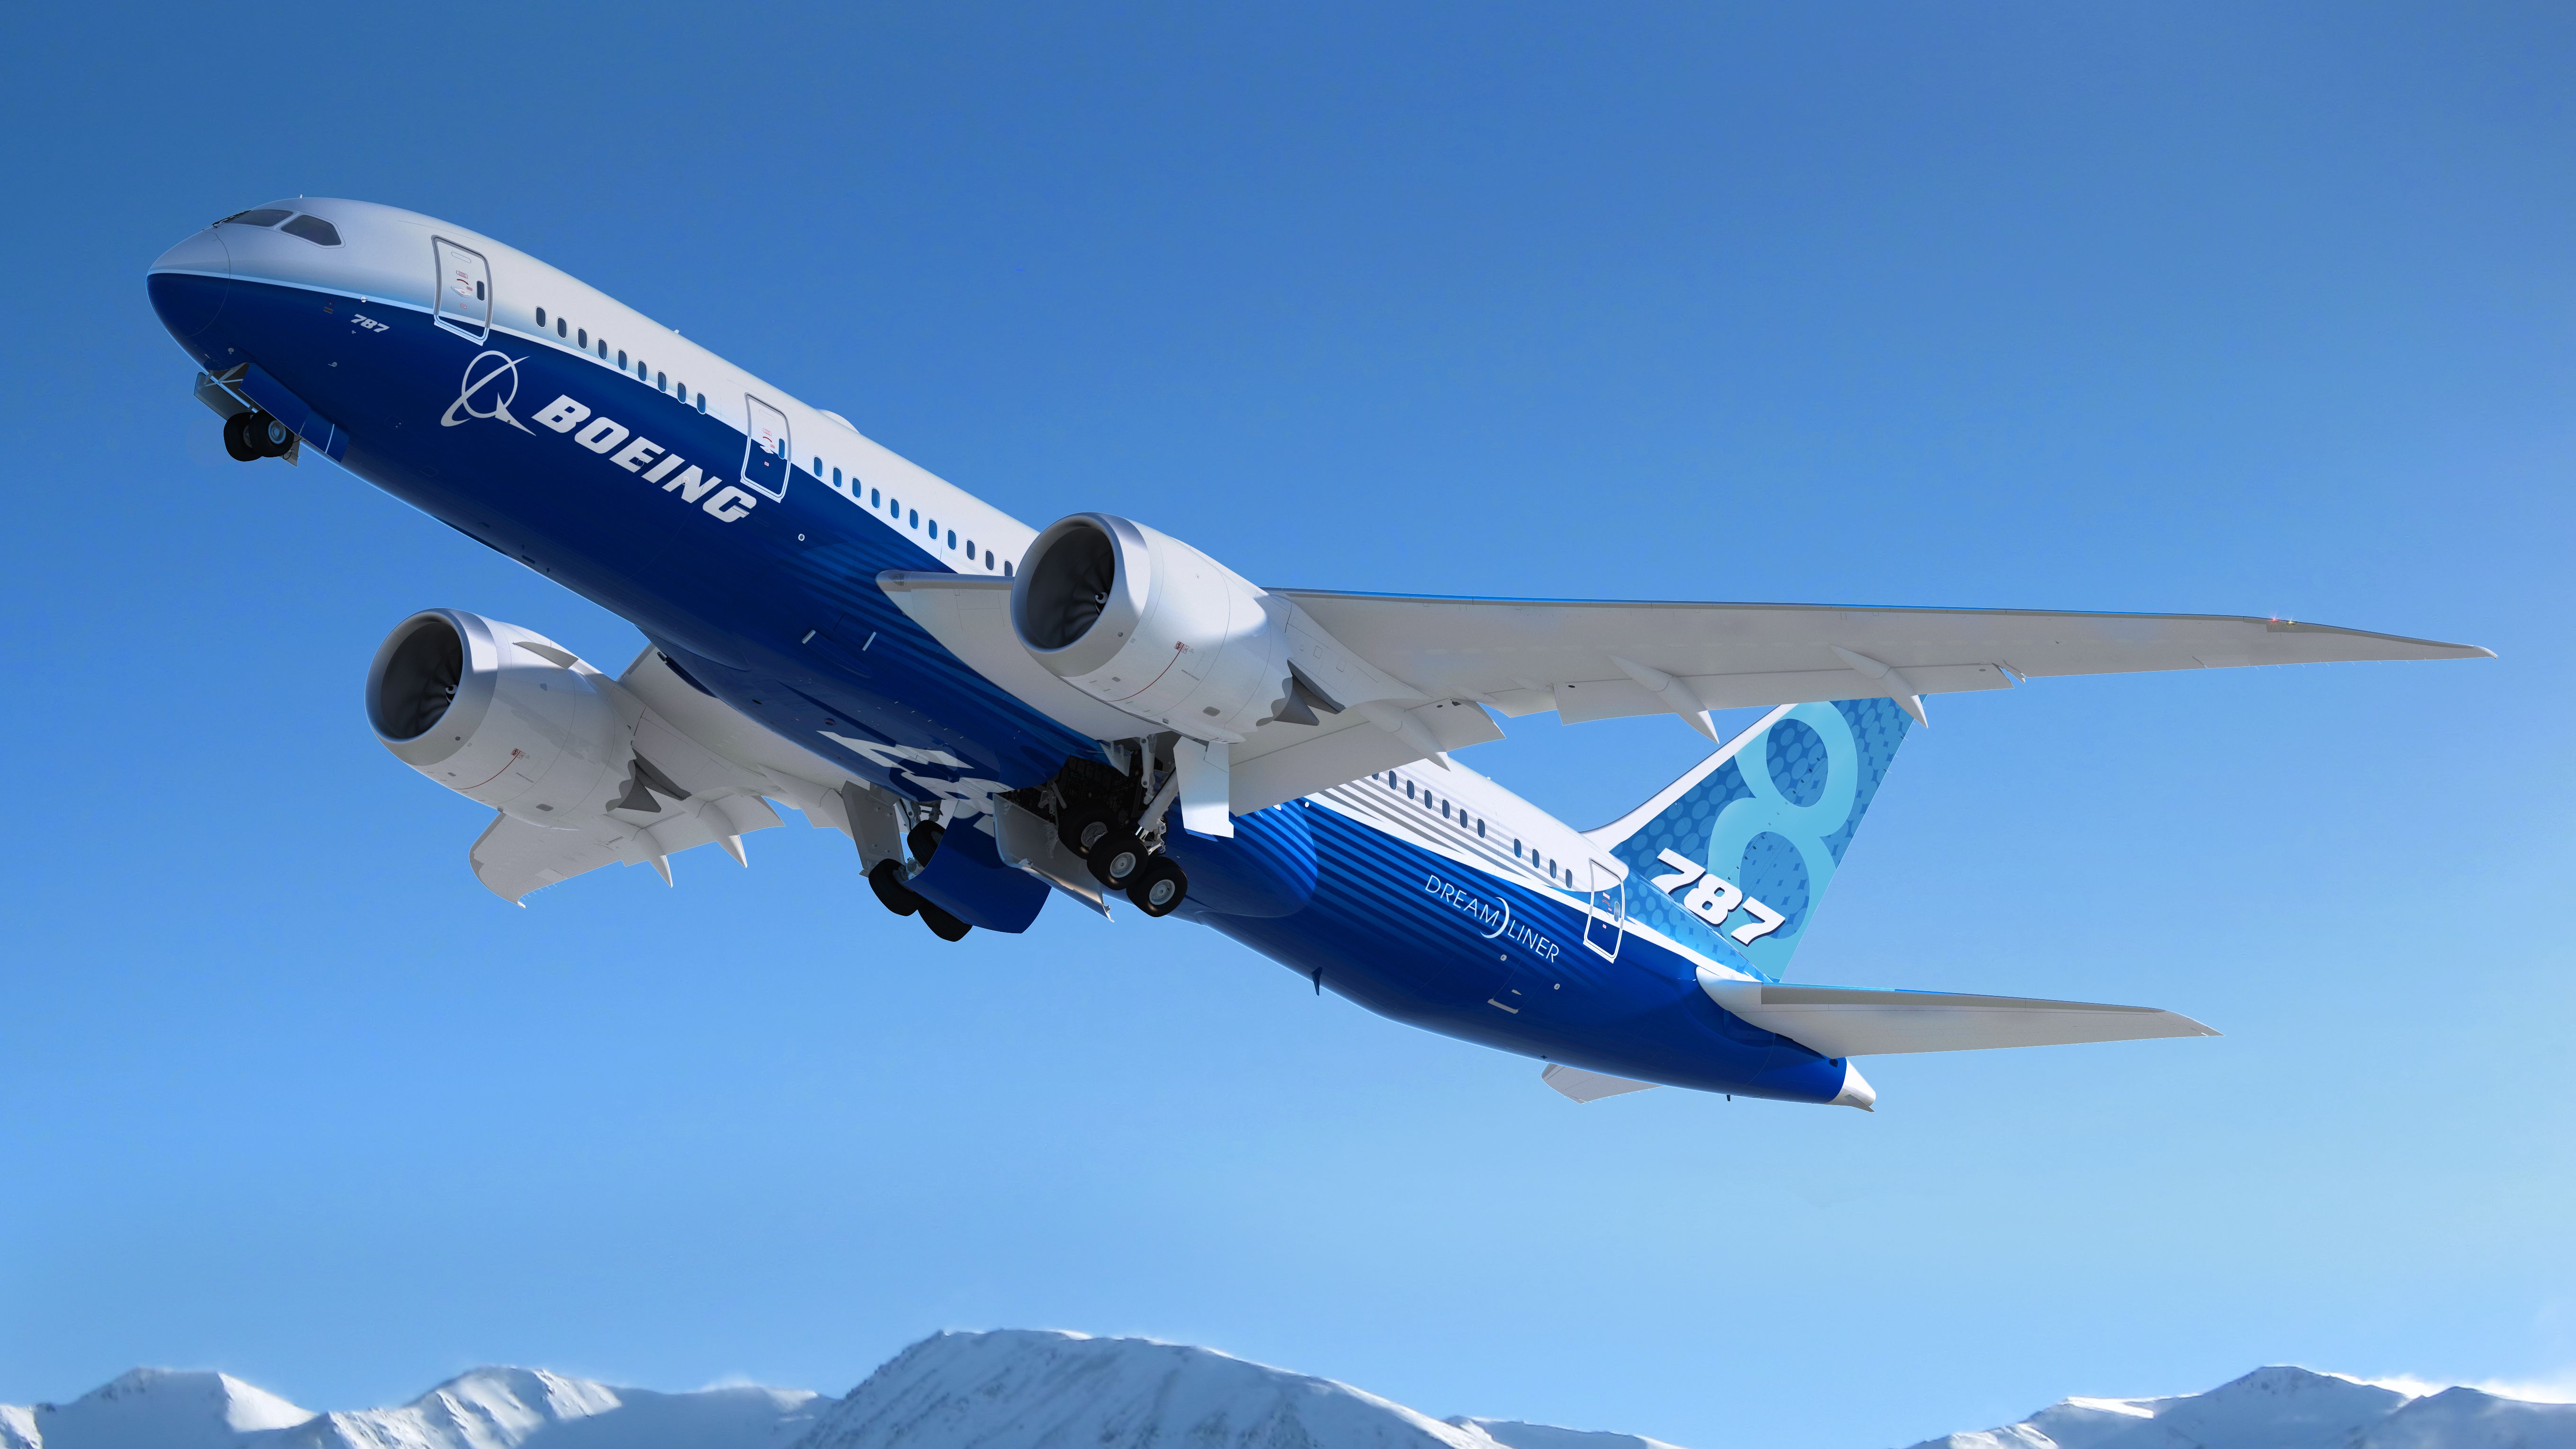 787-8 Dreamliner over mountains